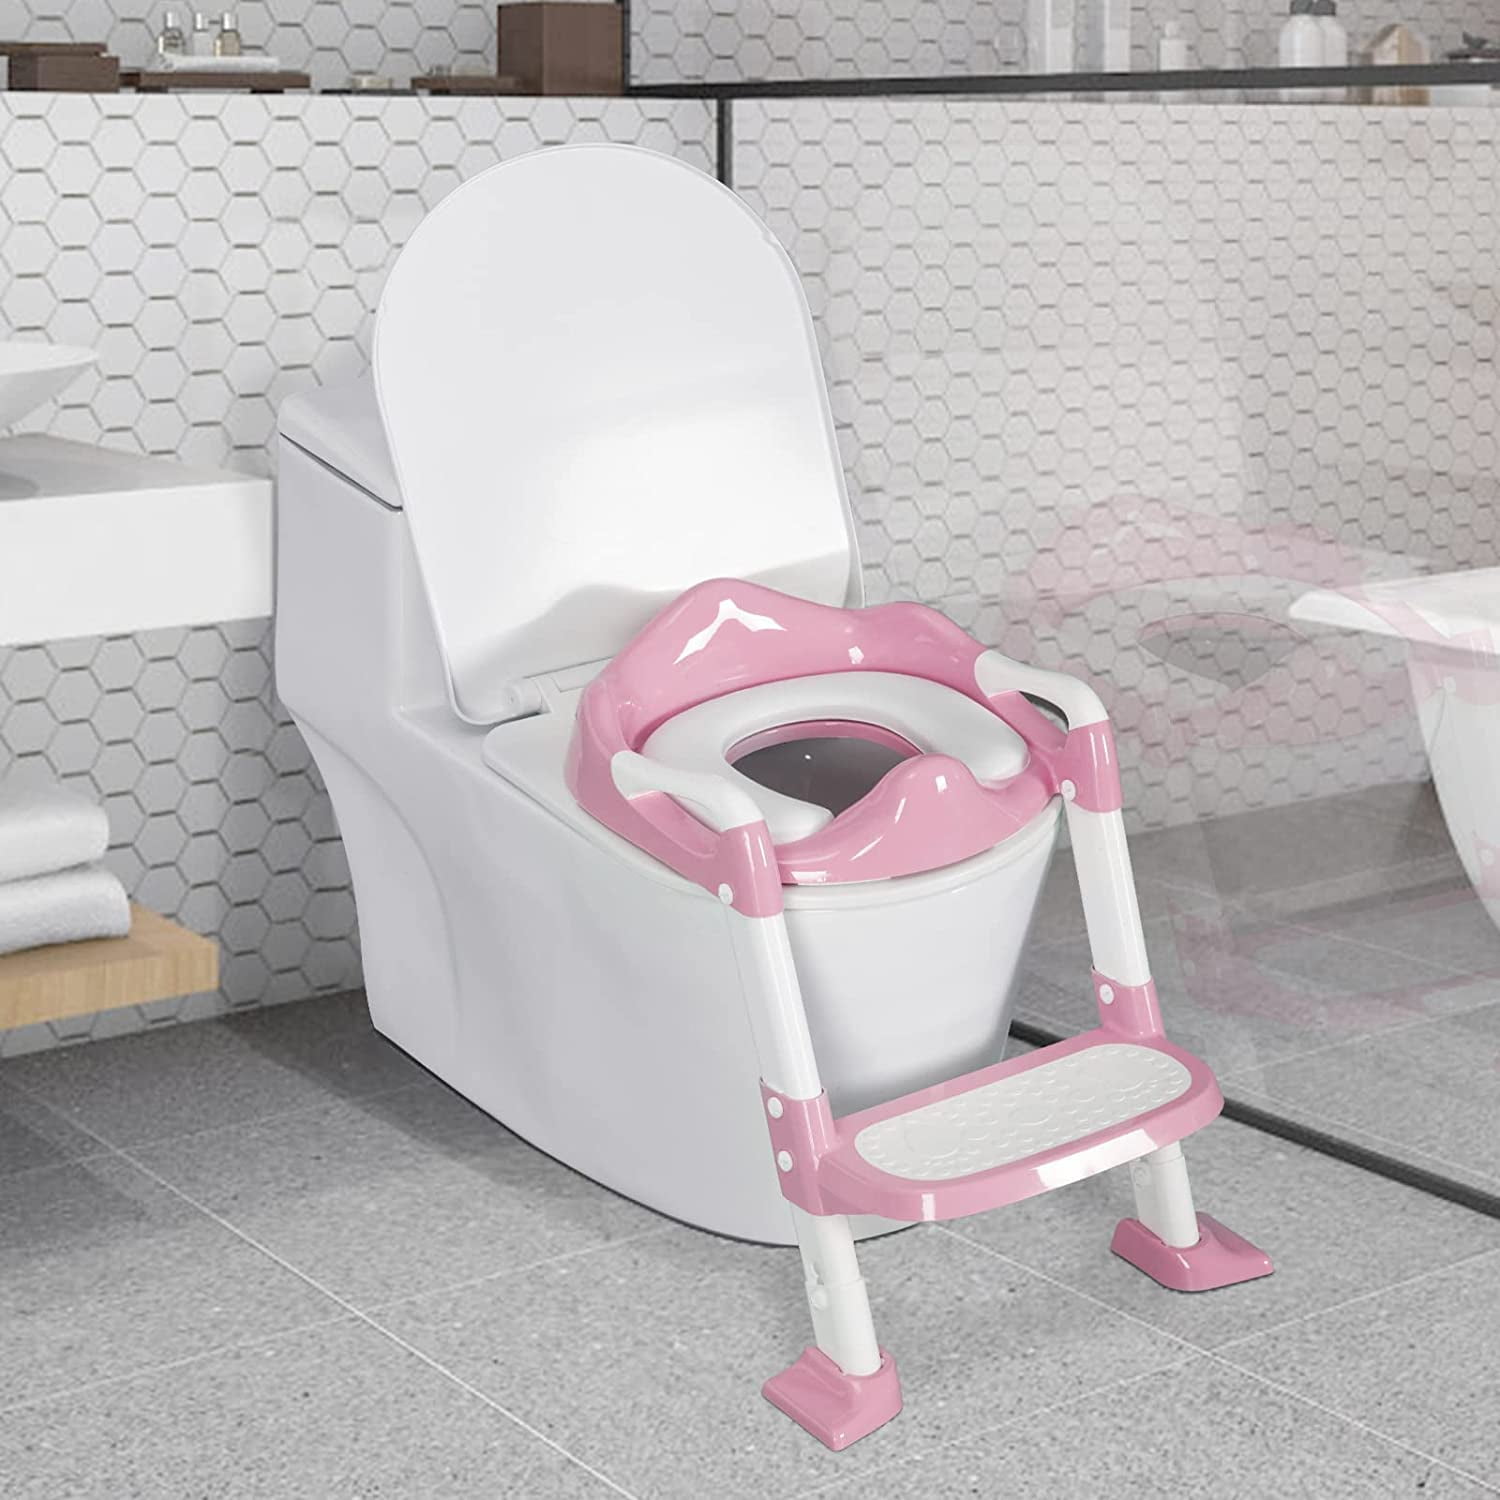 Rabb 1st Potty Training Seat, Upgrade Toddler Toilet Seat for Kids